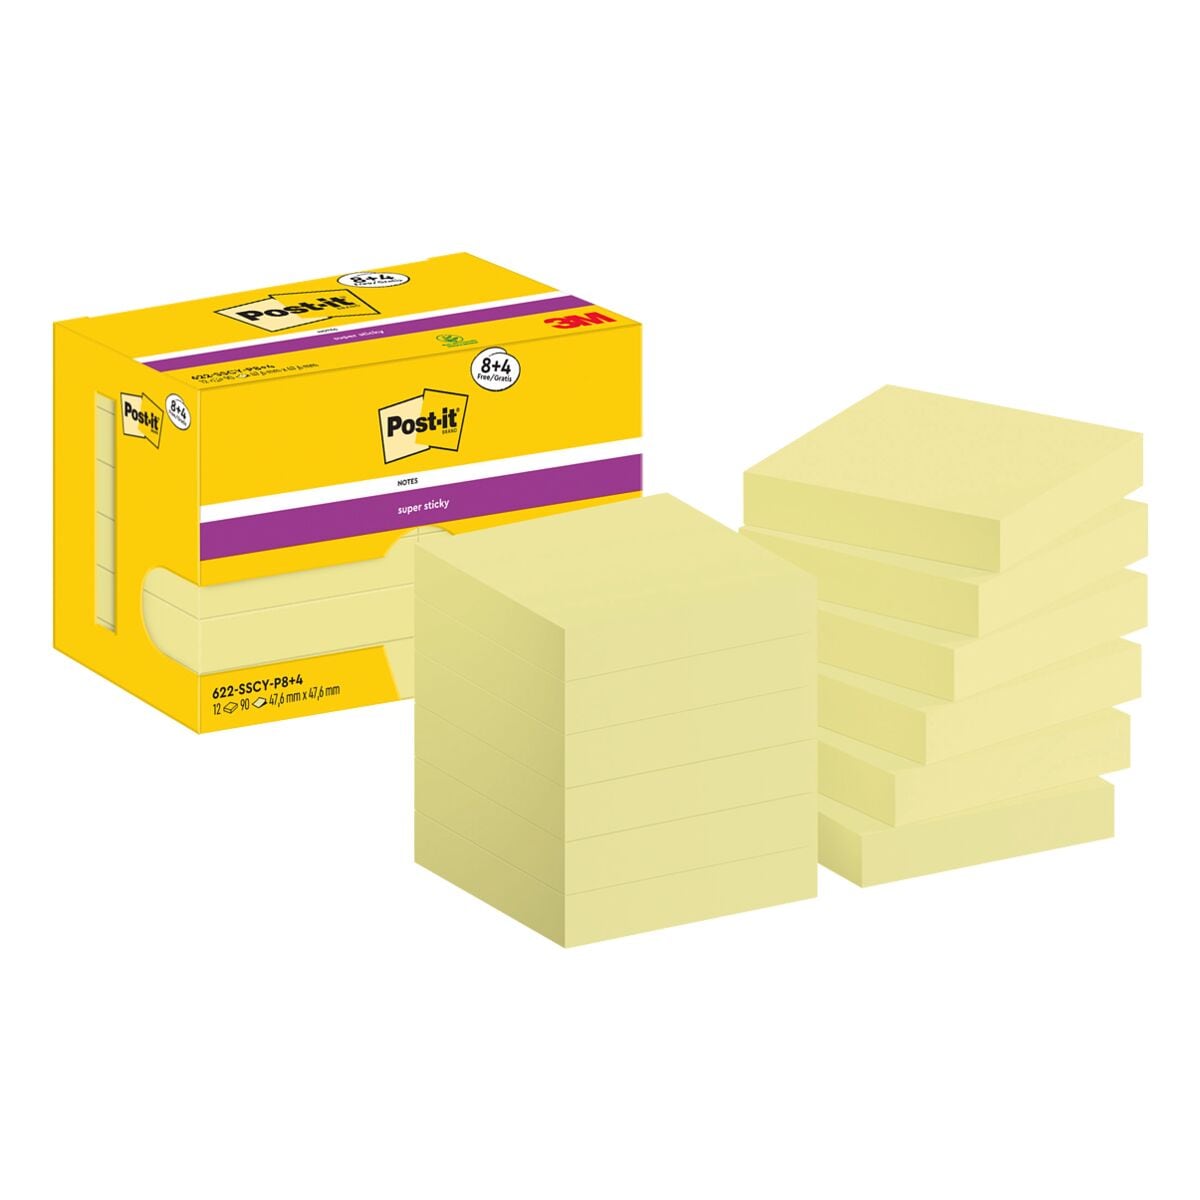 8+4x Post-it Super Sticky Haftnotizblock Notes 4,76 x 4,76 cm, 1080 Blatt gesamt, gelb